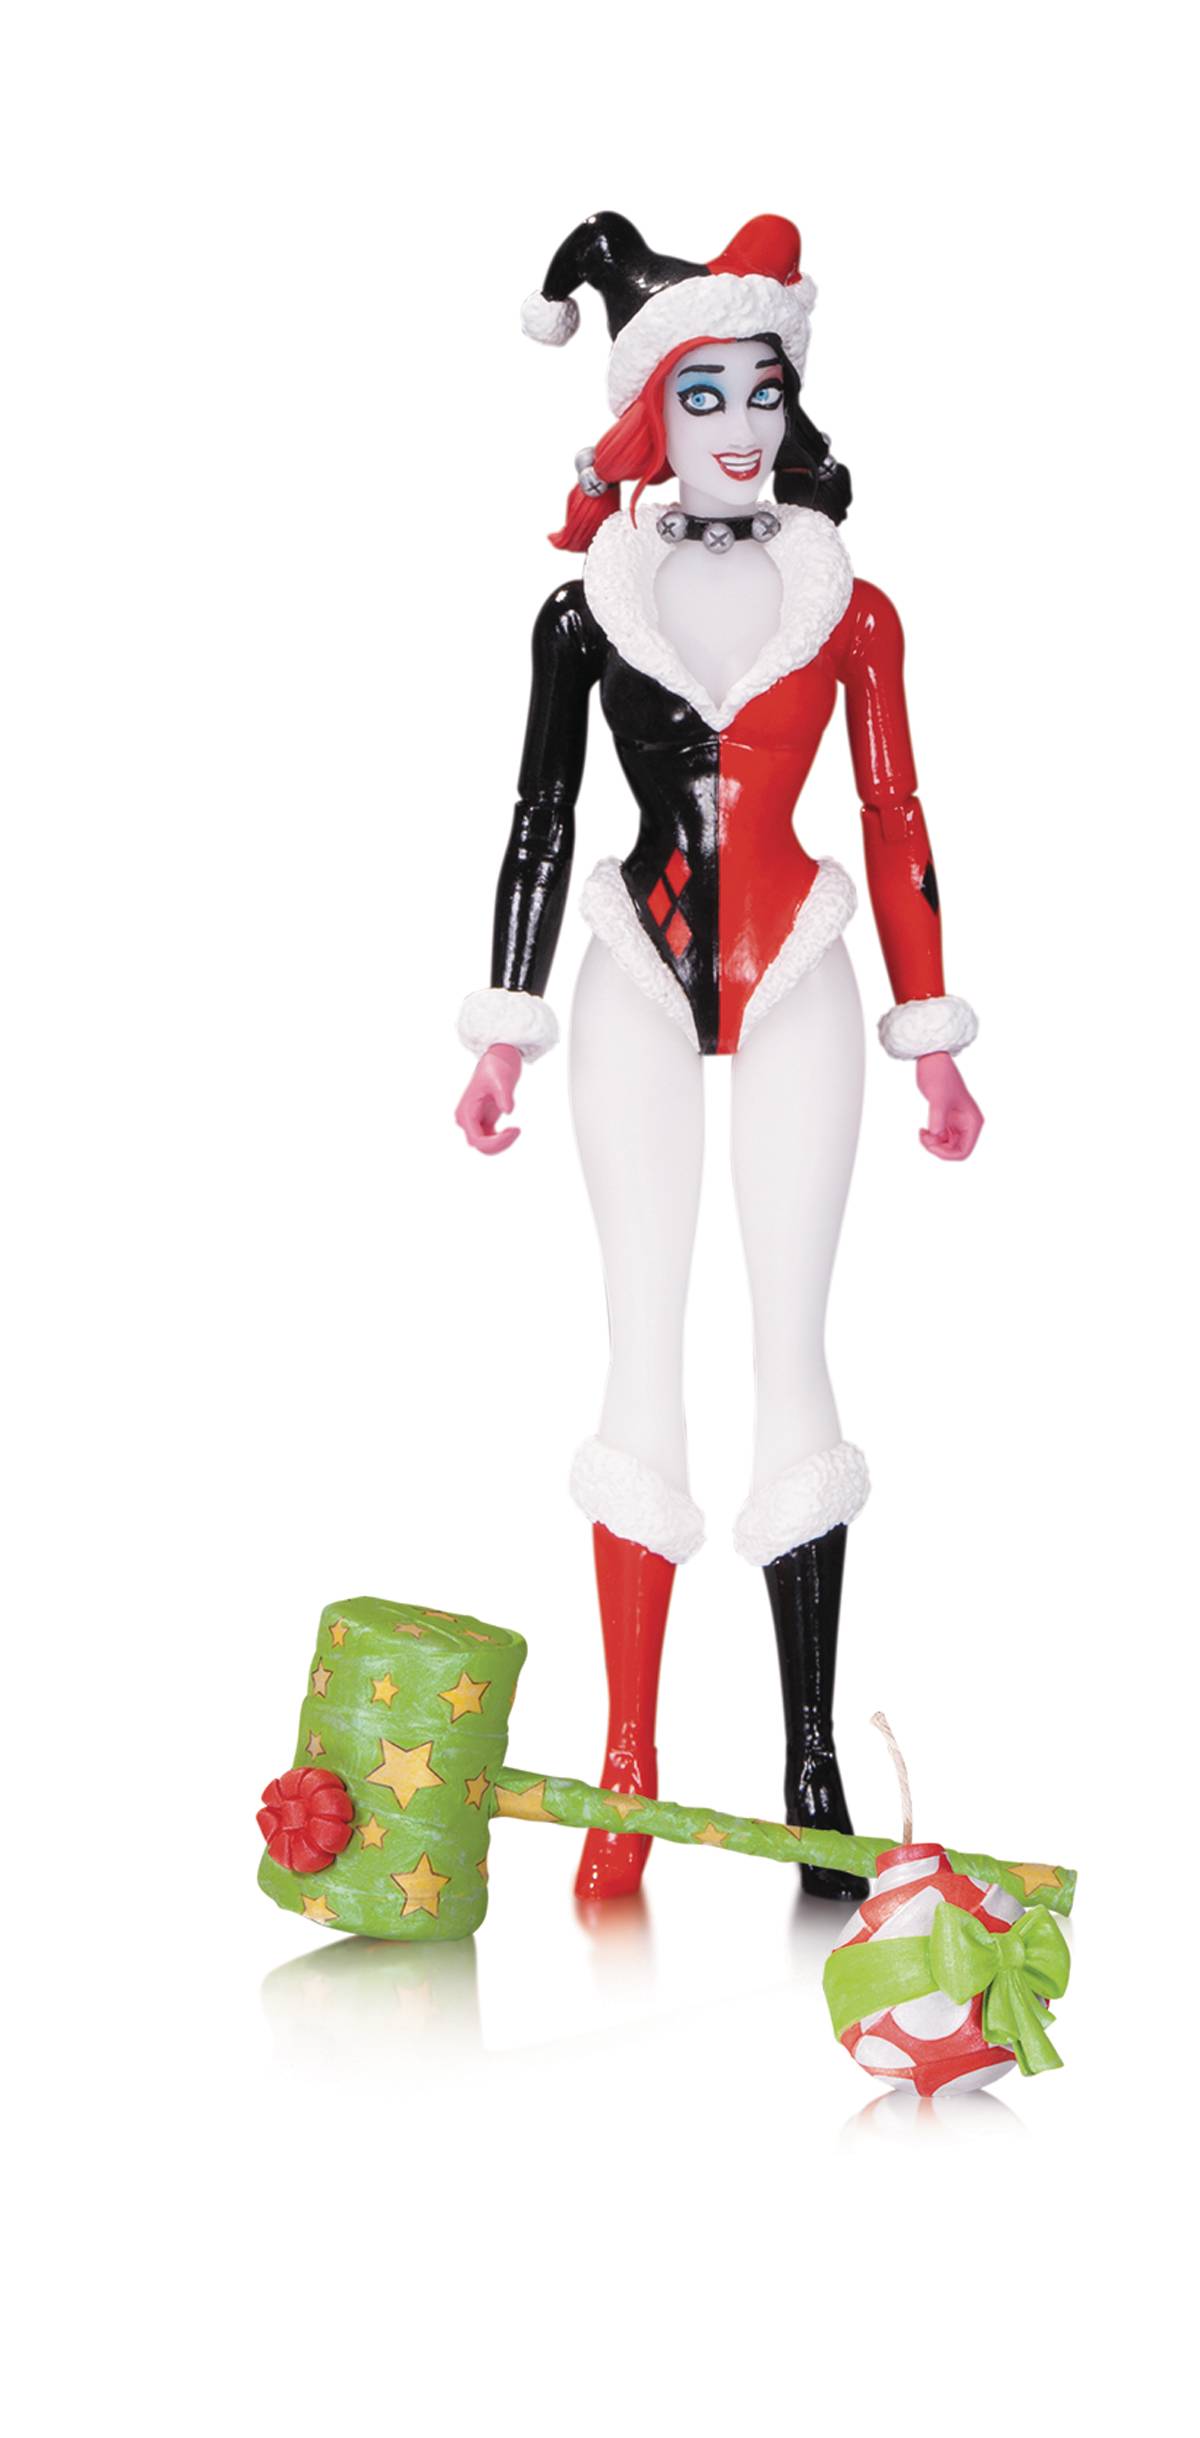 DC Comics Designer Series Conner Harley Quinn Holiday Figure